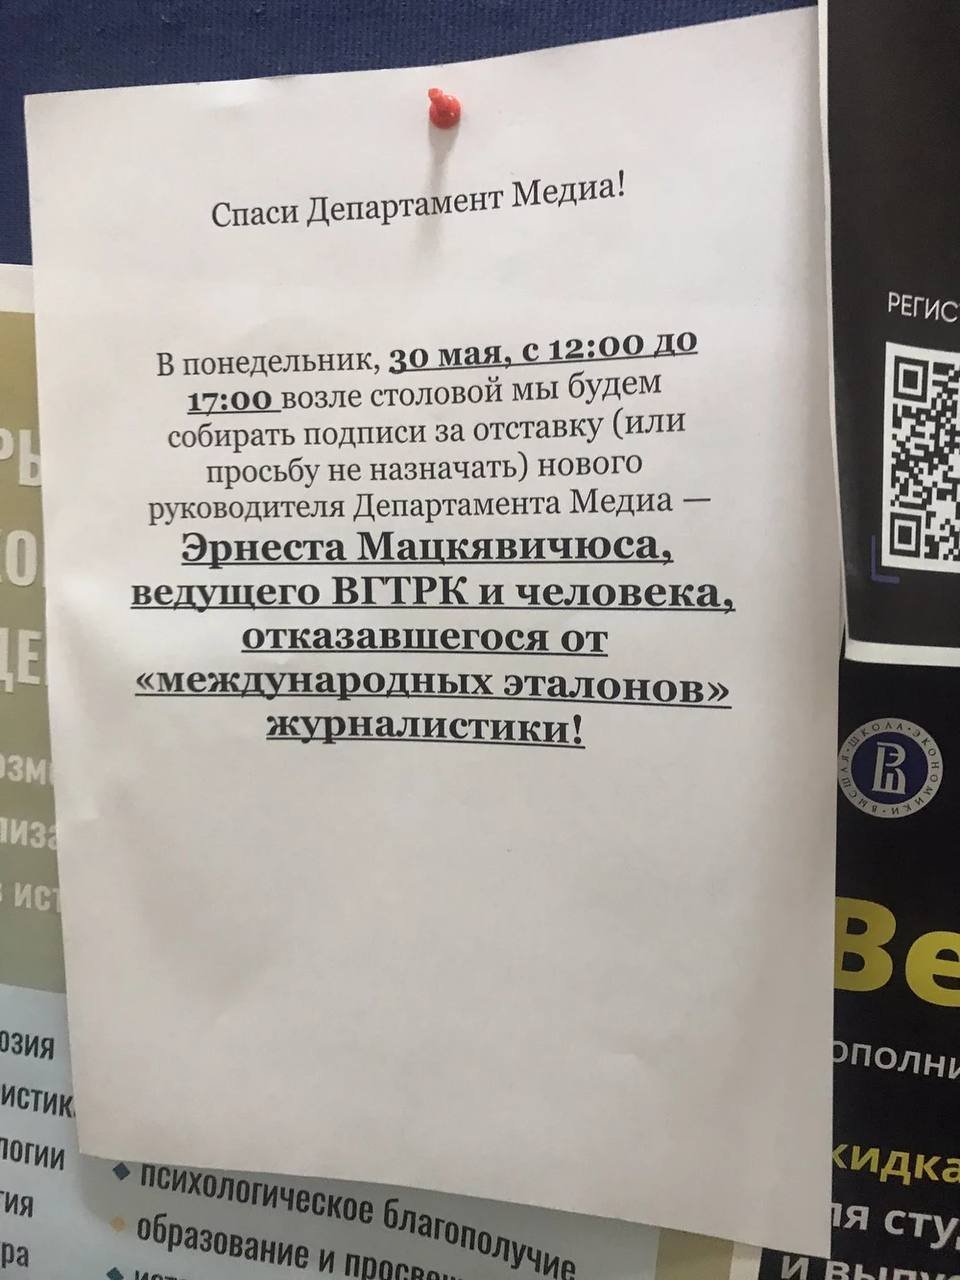 Объявление о сборе подписей за отставку Мацкявичюса. Фото автора